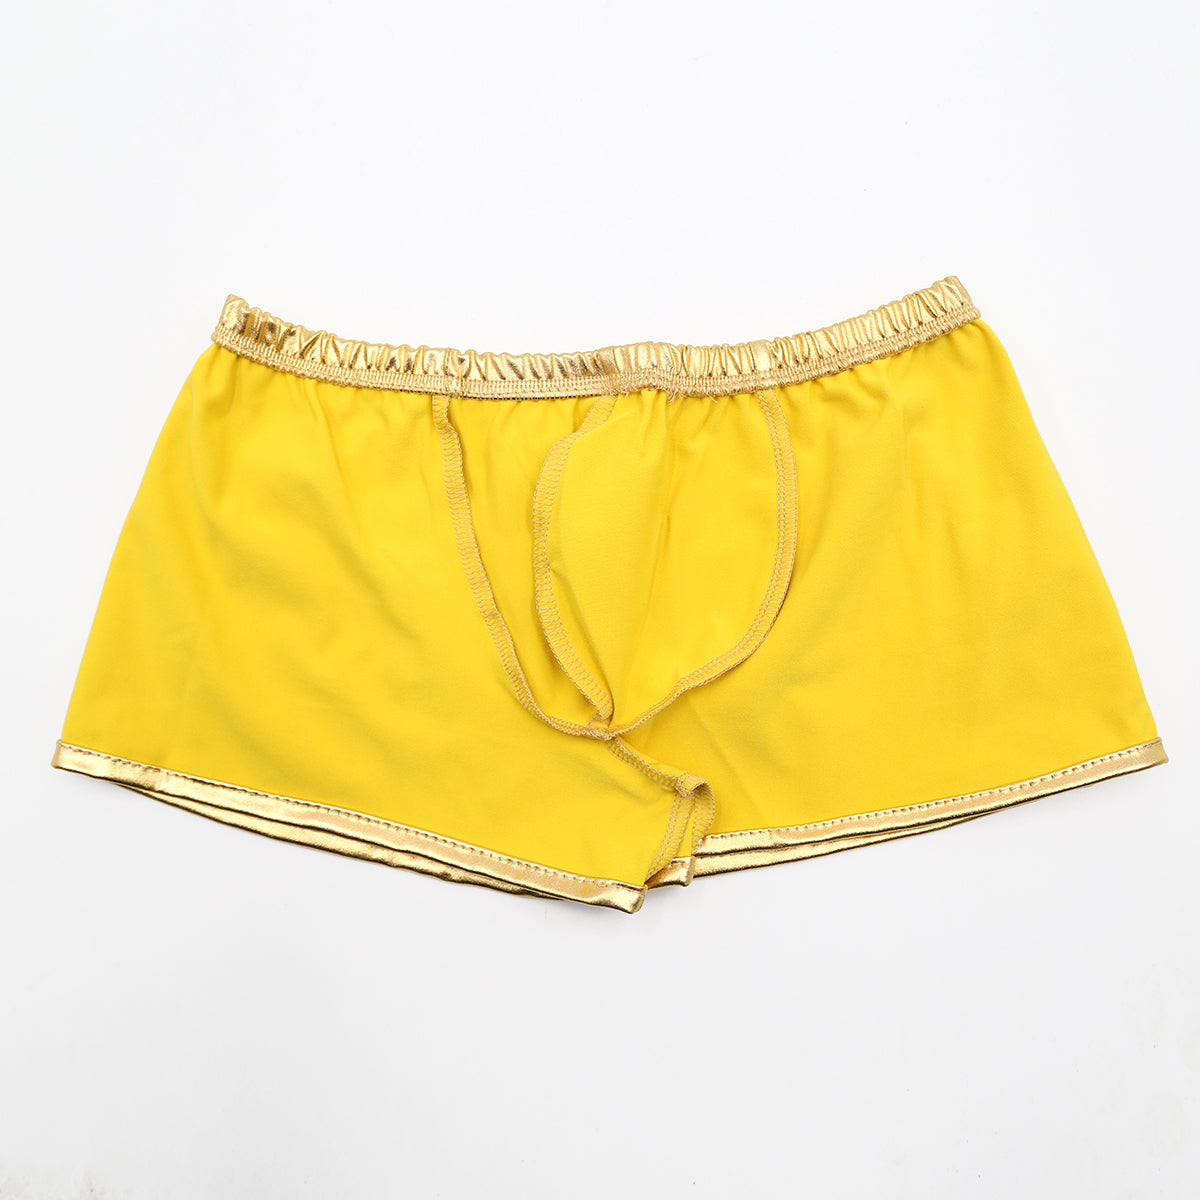 Spandex Frau Boxers Shorts goldfarbend